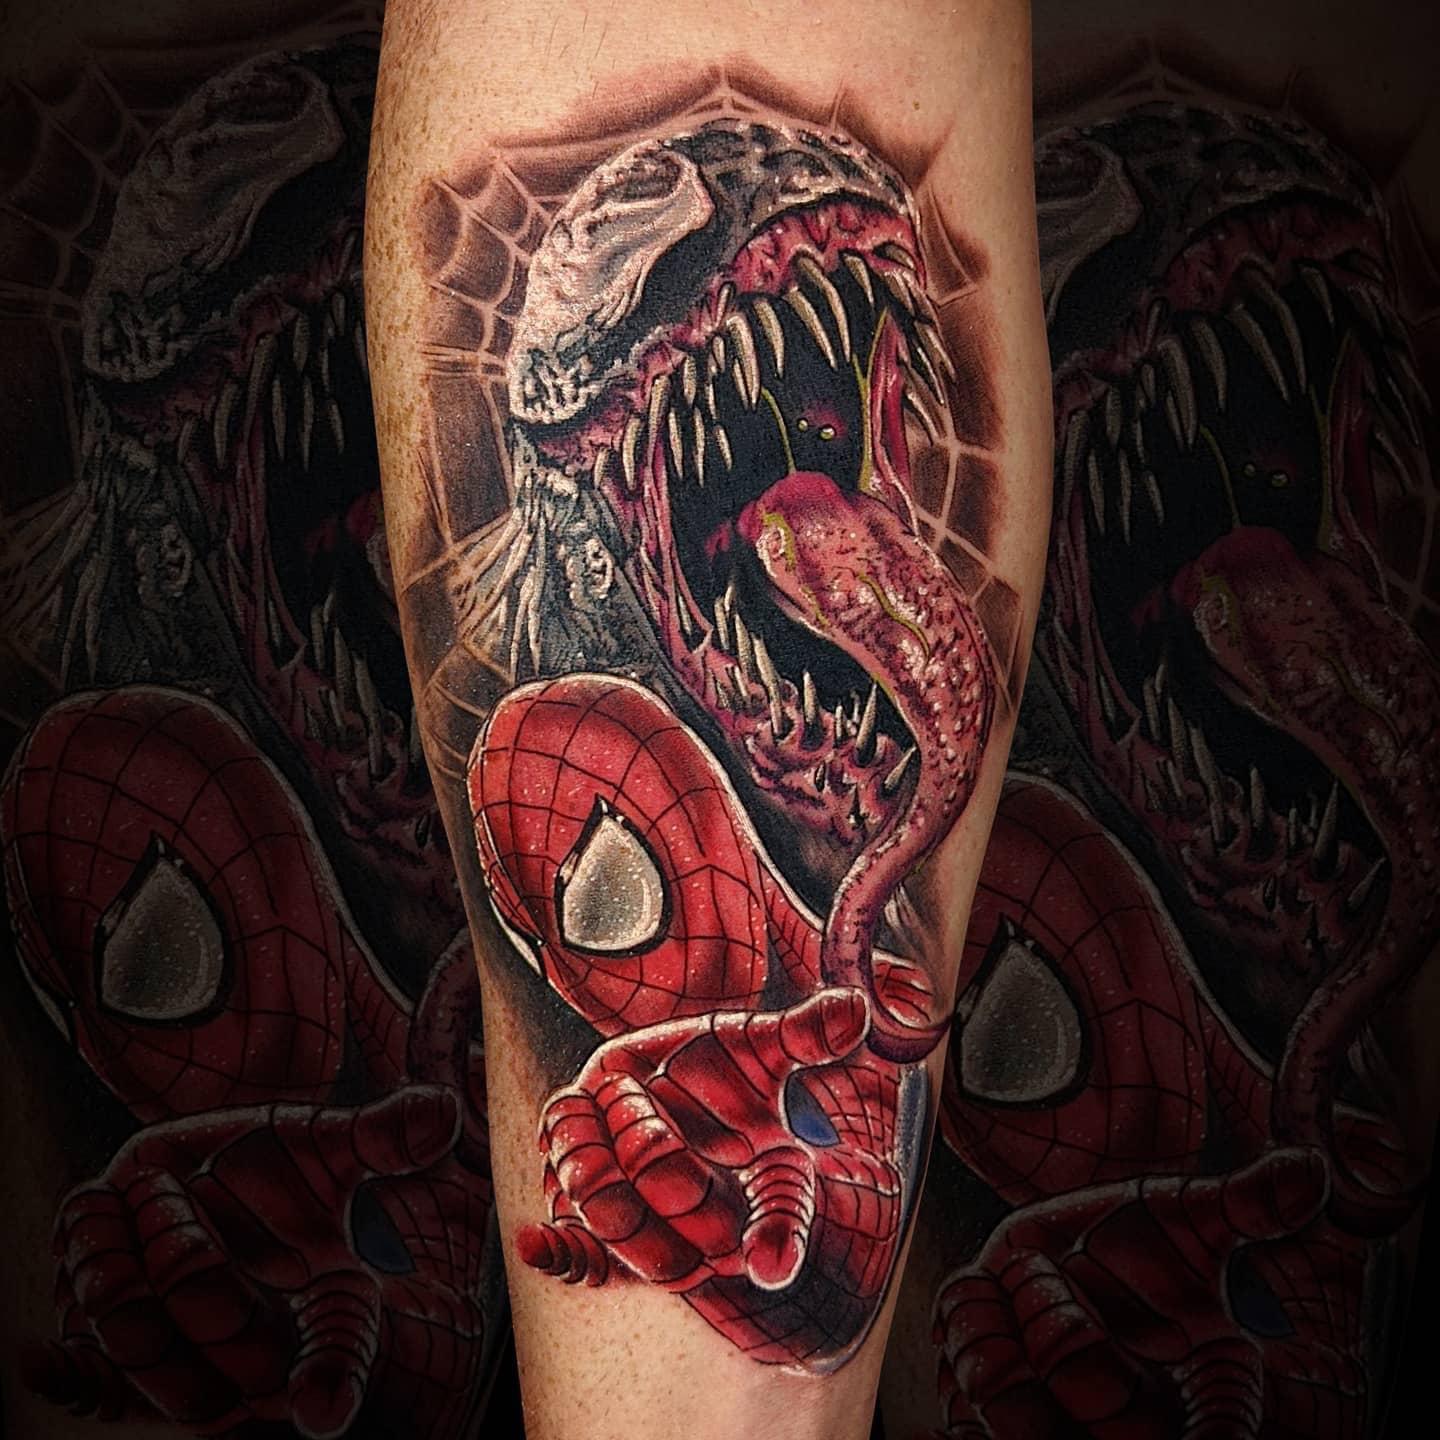 Spider Man and Venom tattoo by josh at marked society tattoo